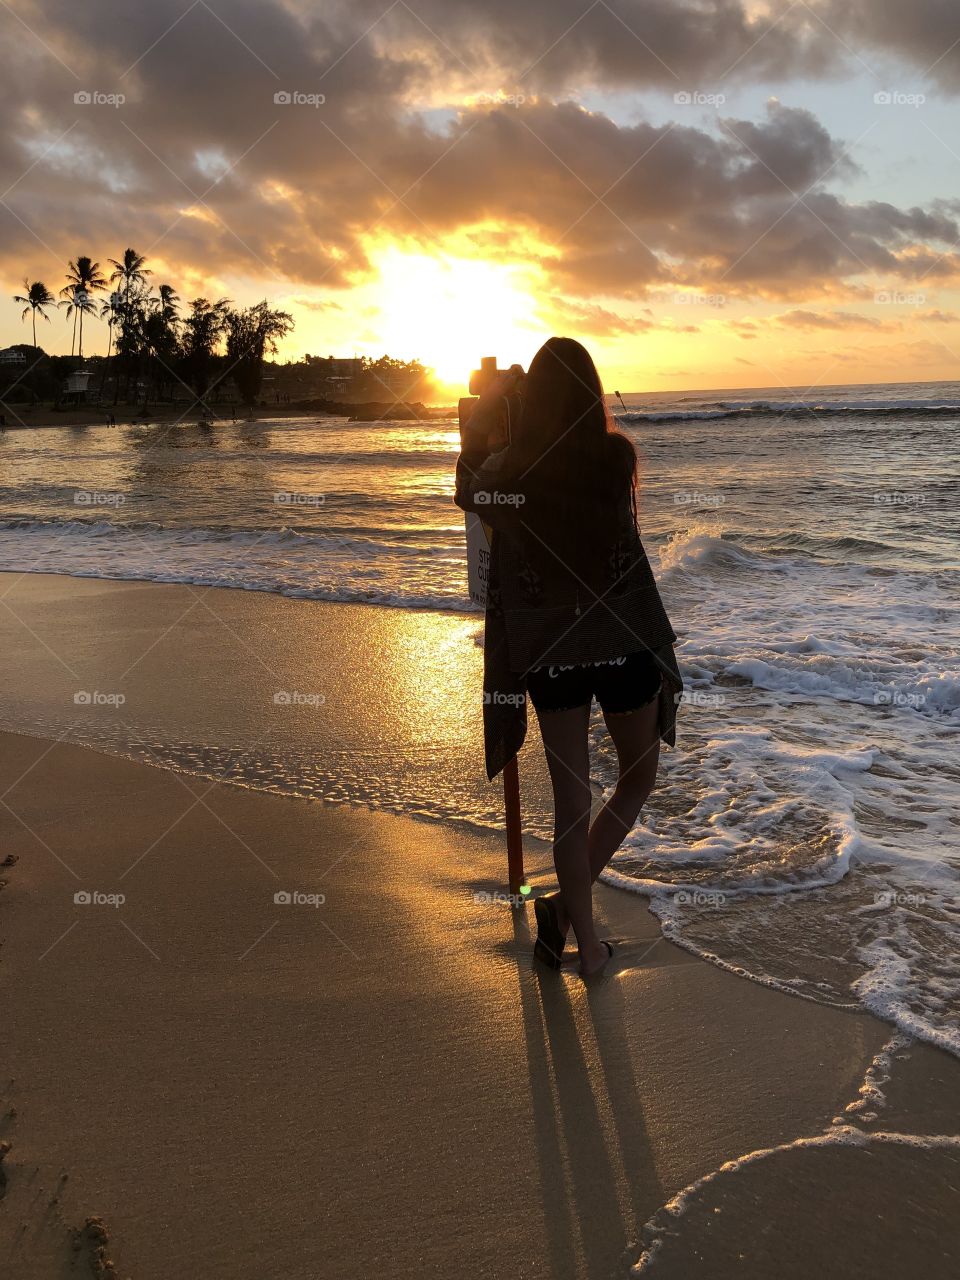 Watching the sunrise in Hawaii